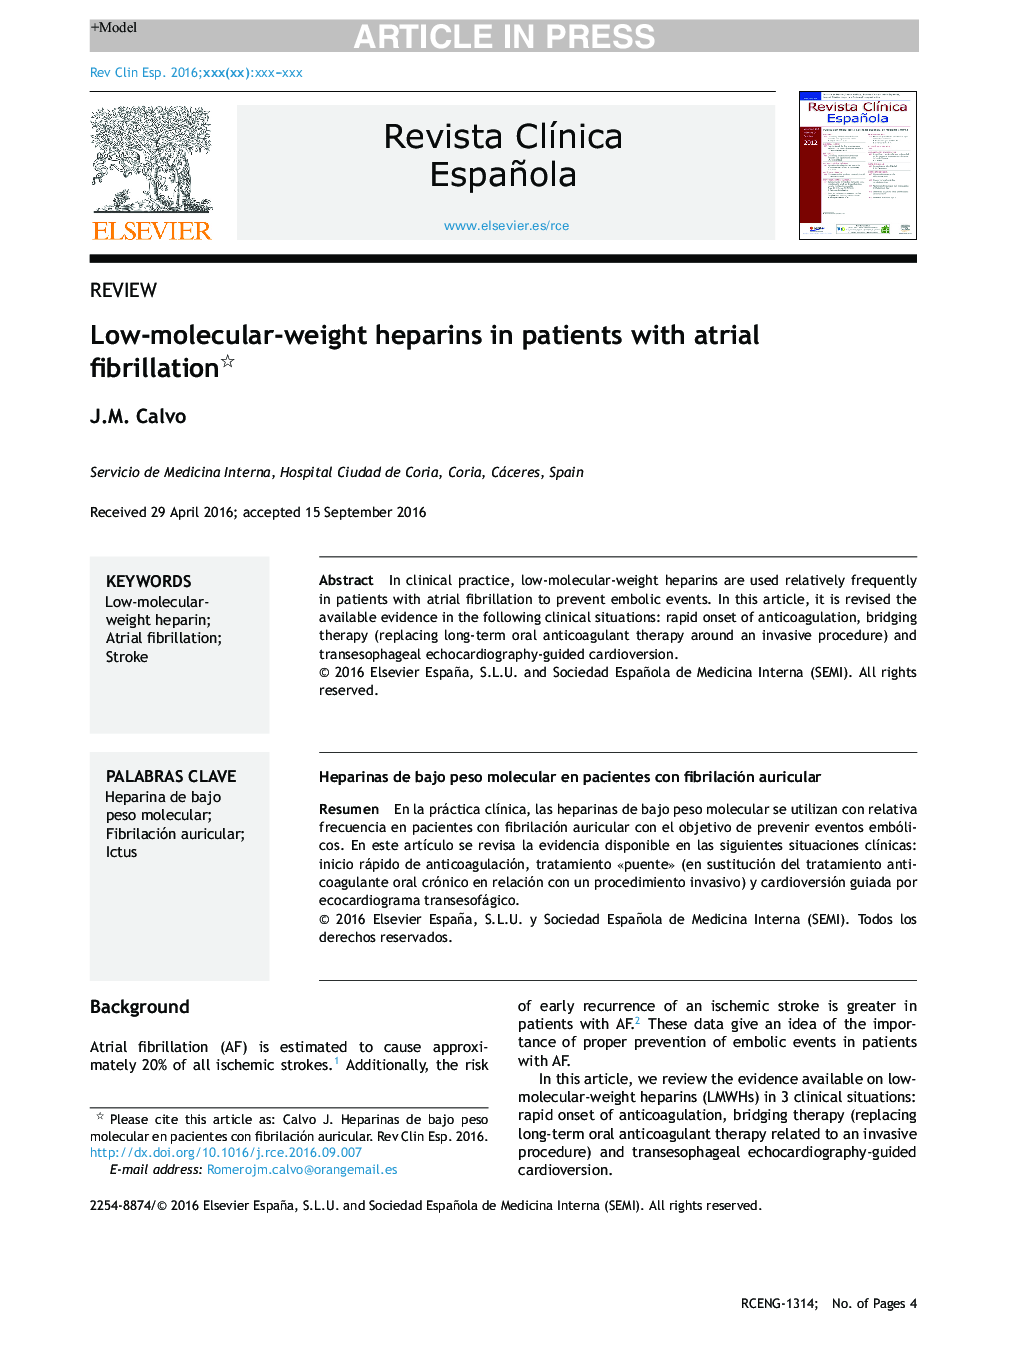 Low-molecular-weight heparins in patients with atrial fibrillation